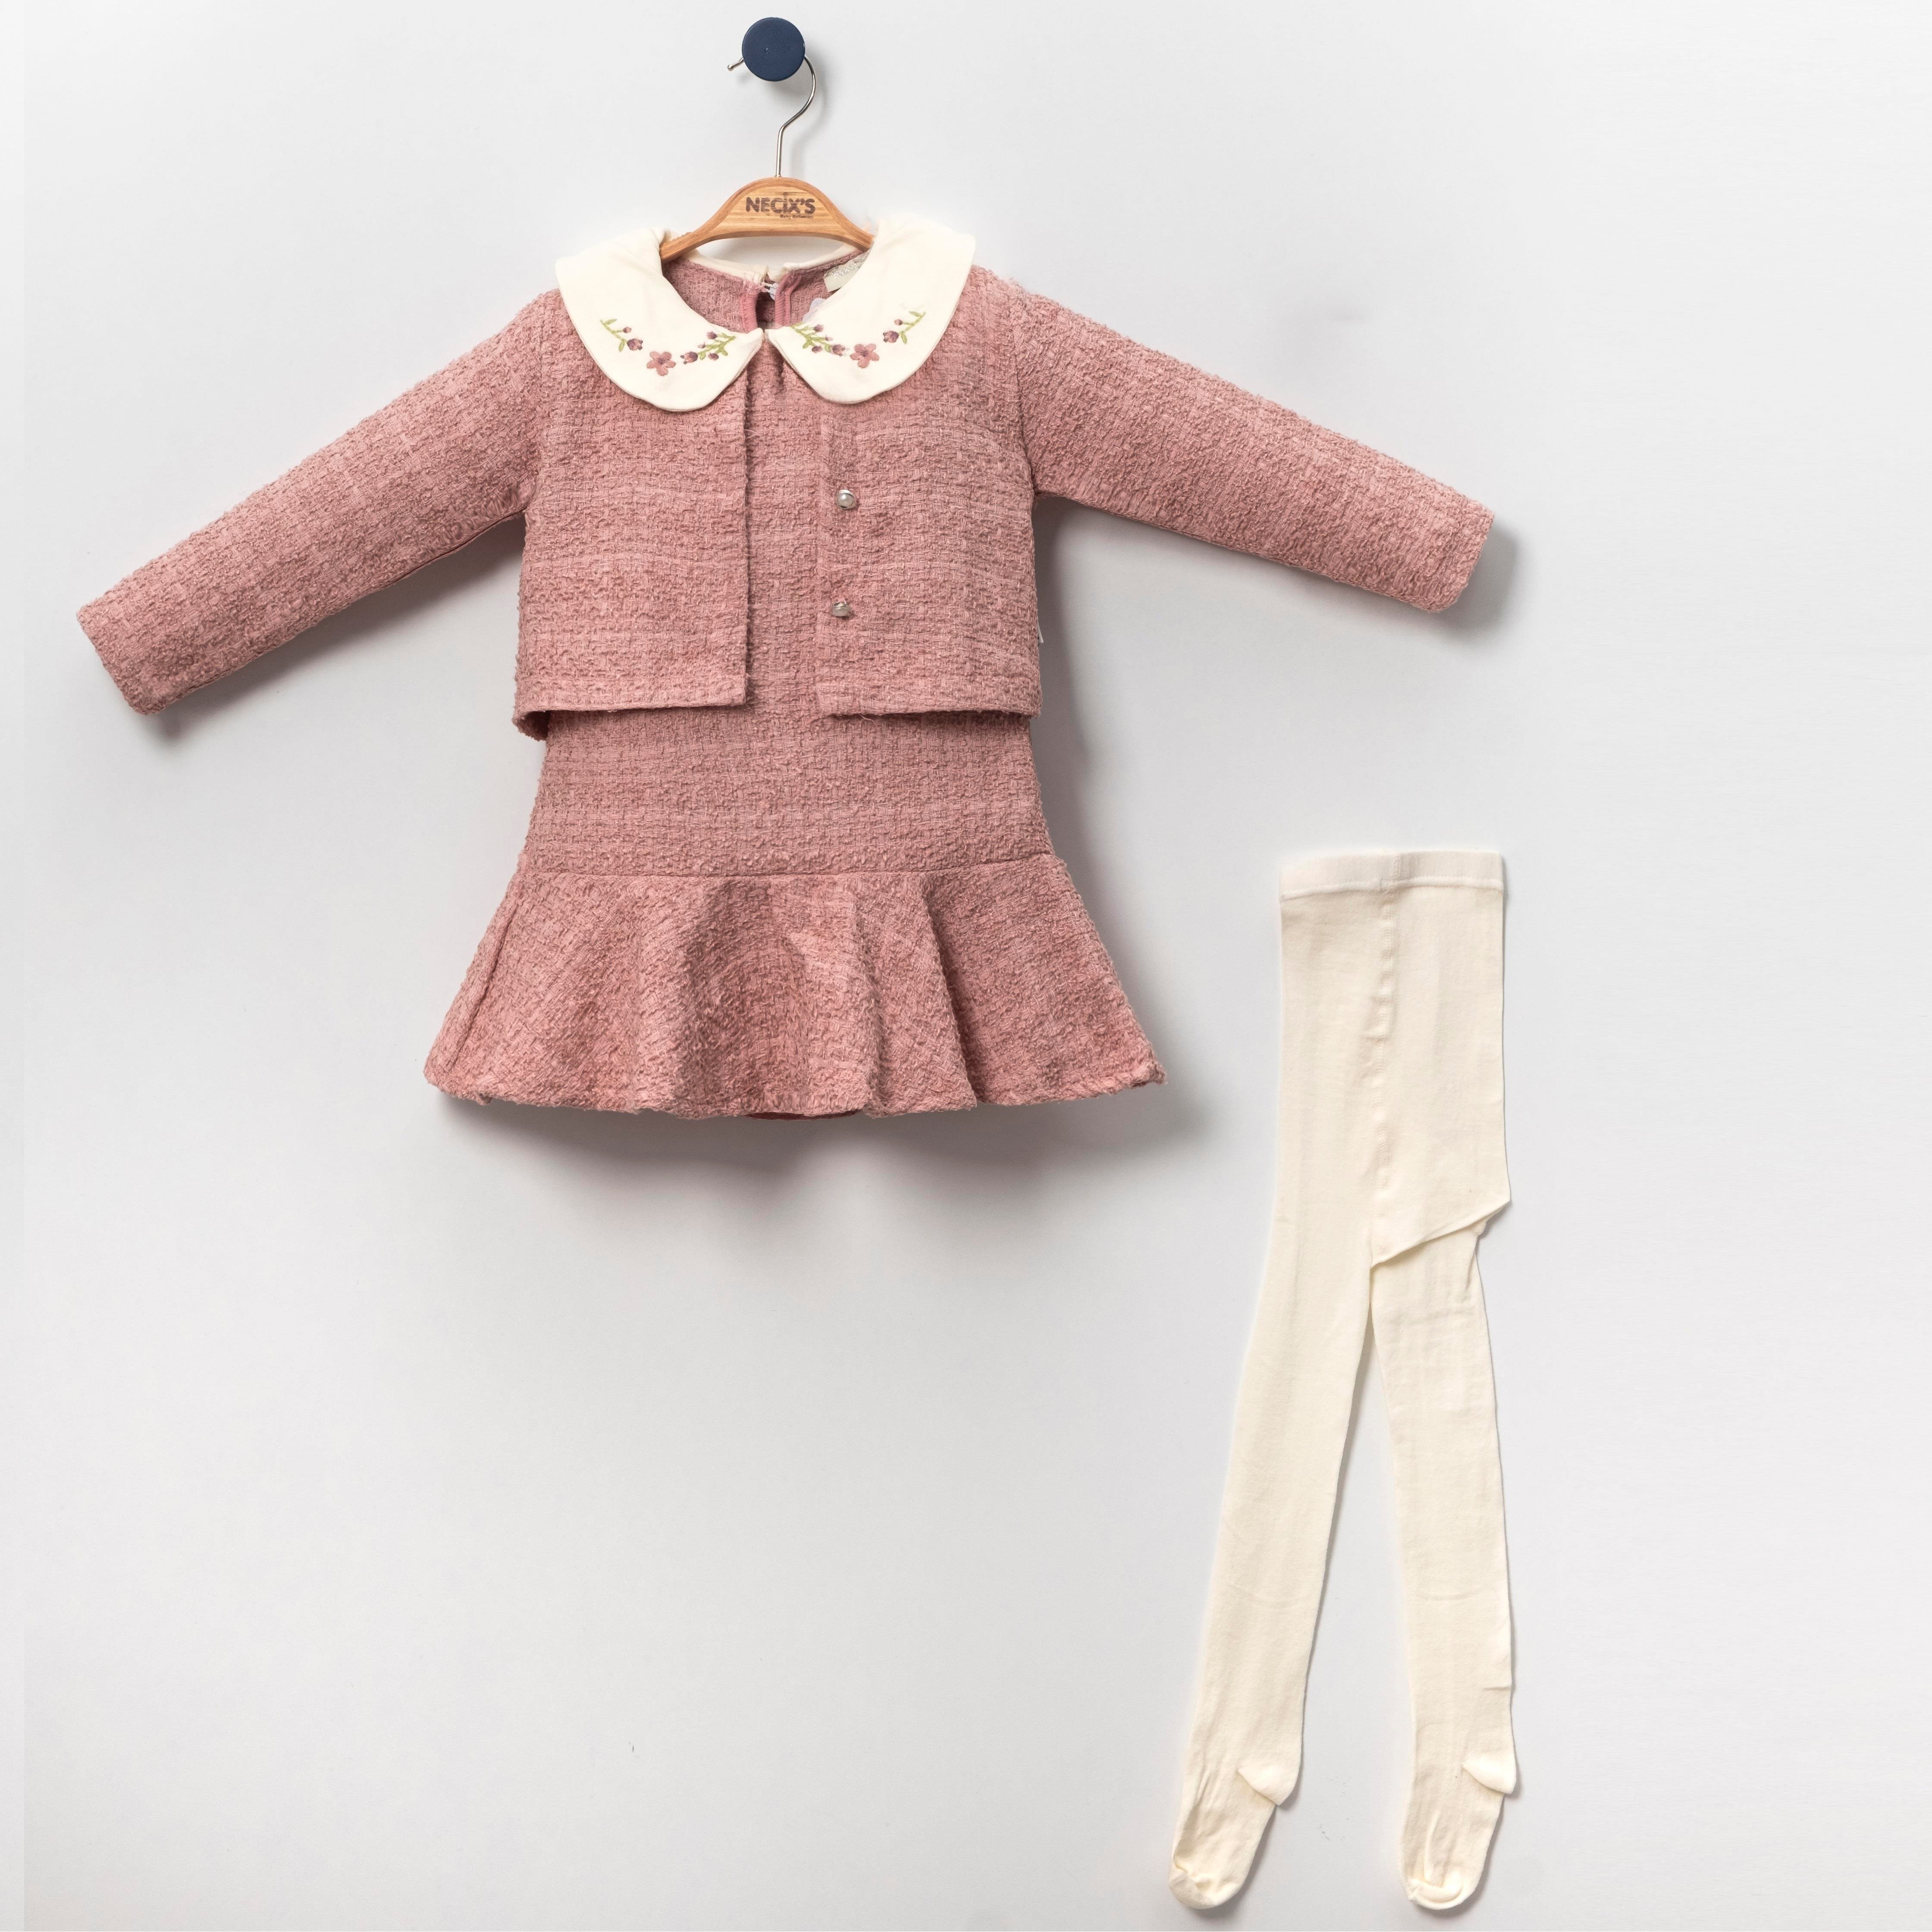 Necix's Chanel Ceketli Kolej Bebek Elbise